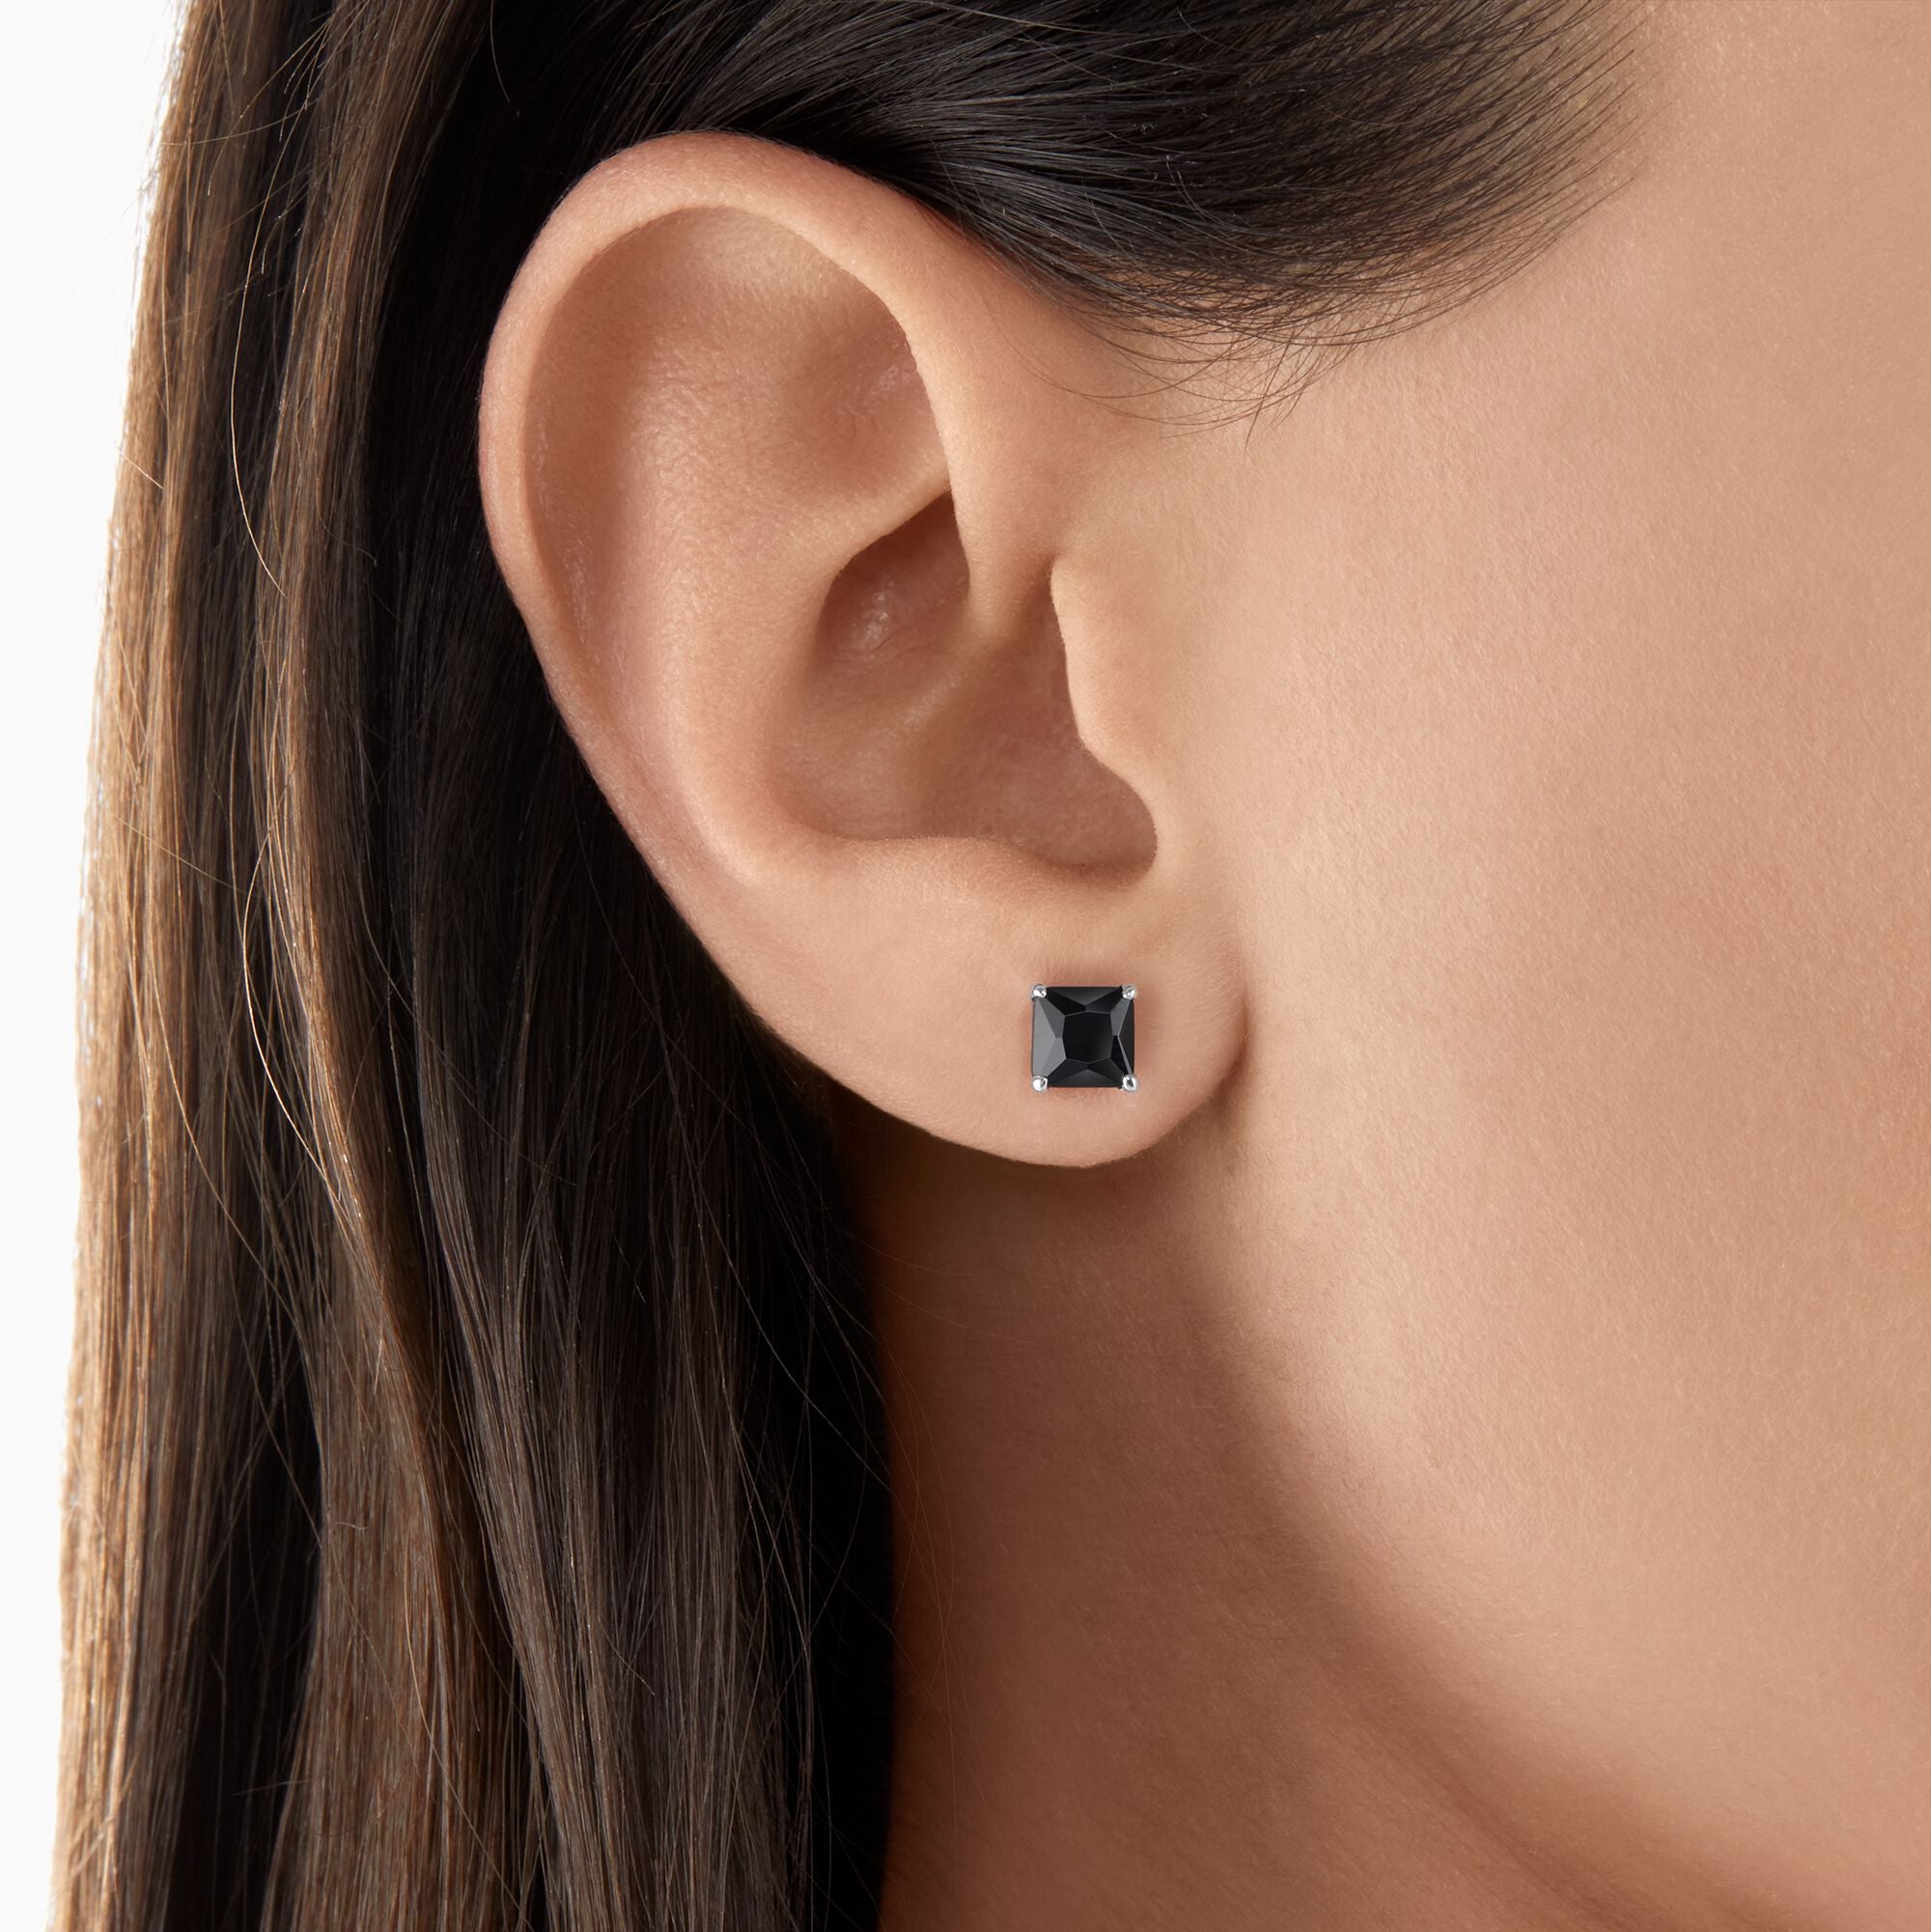 Thomas Sabo Square Cut Black Onyx Ear Studs worn by a woman